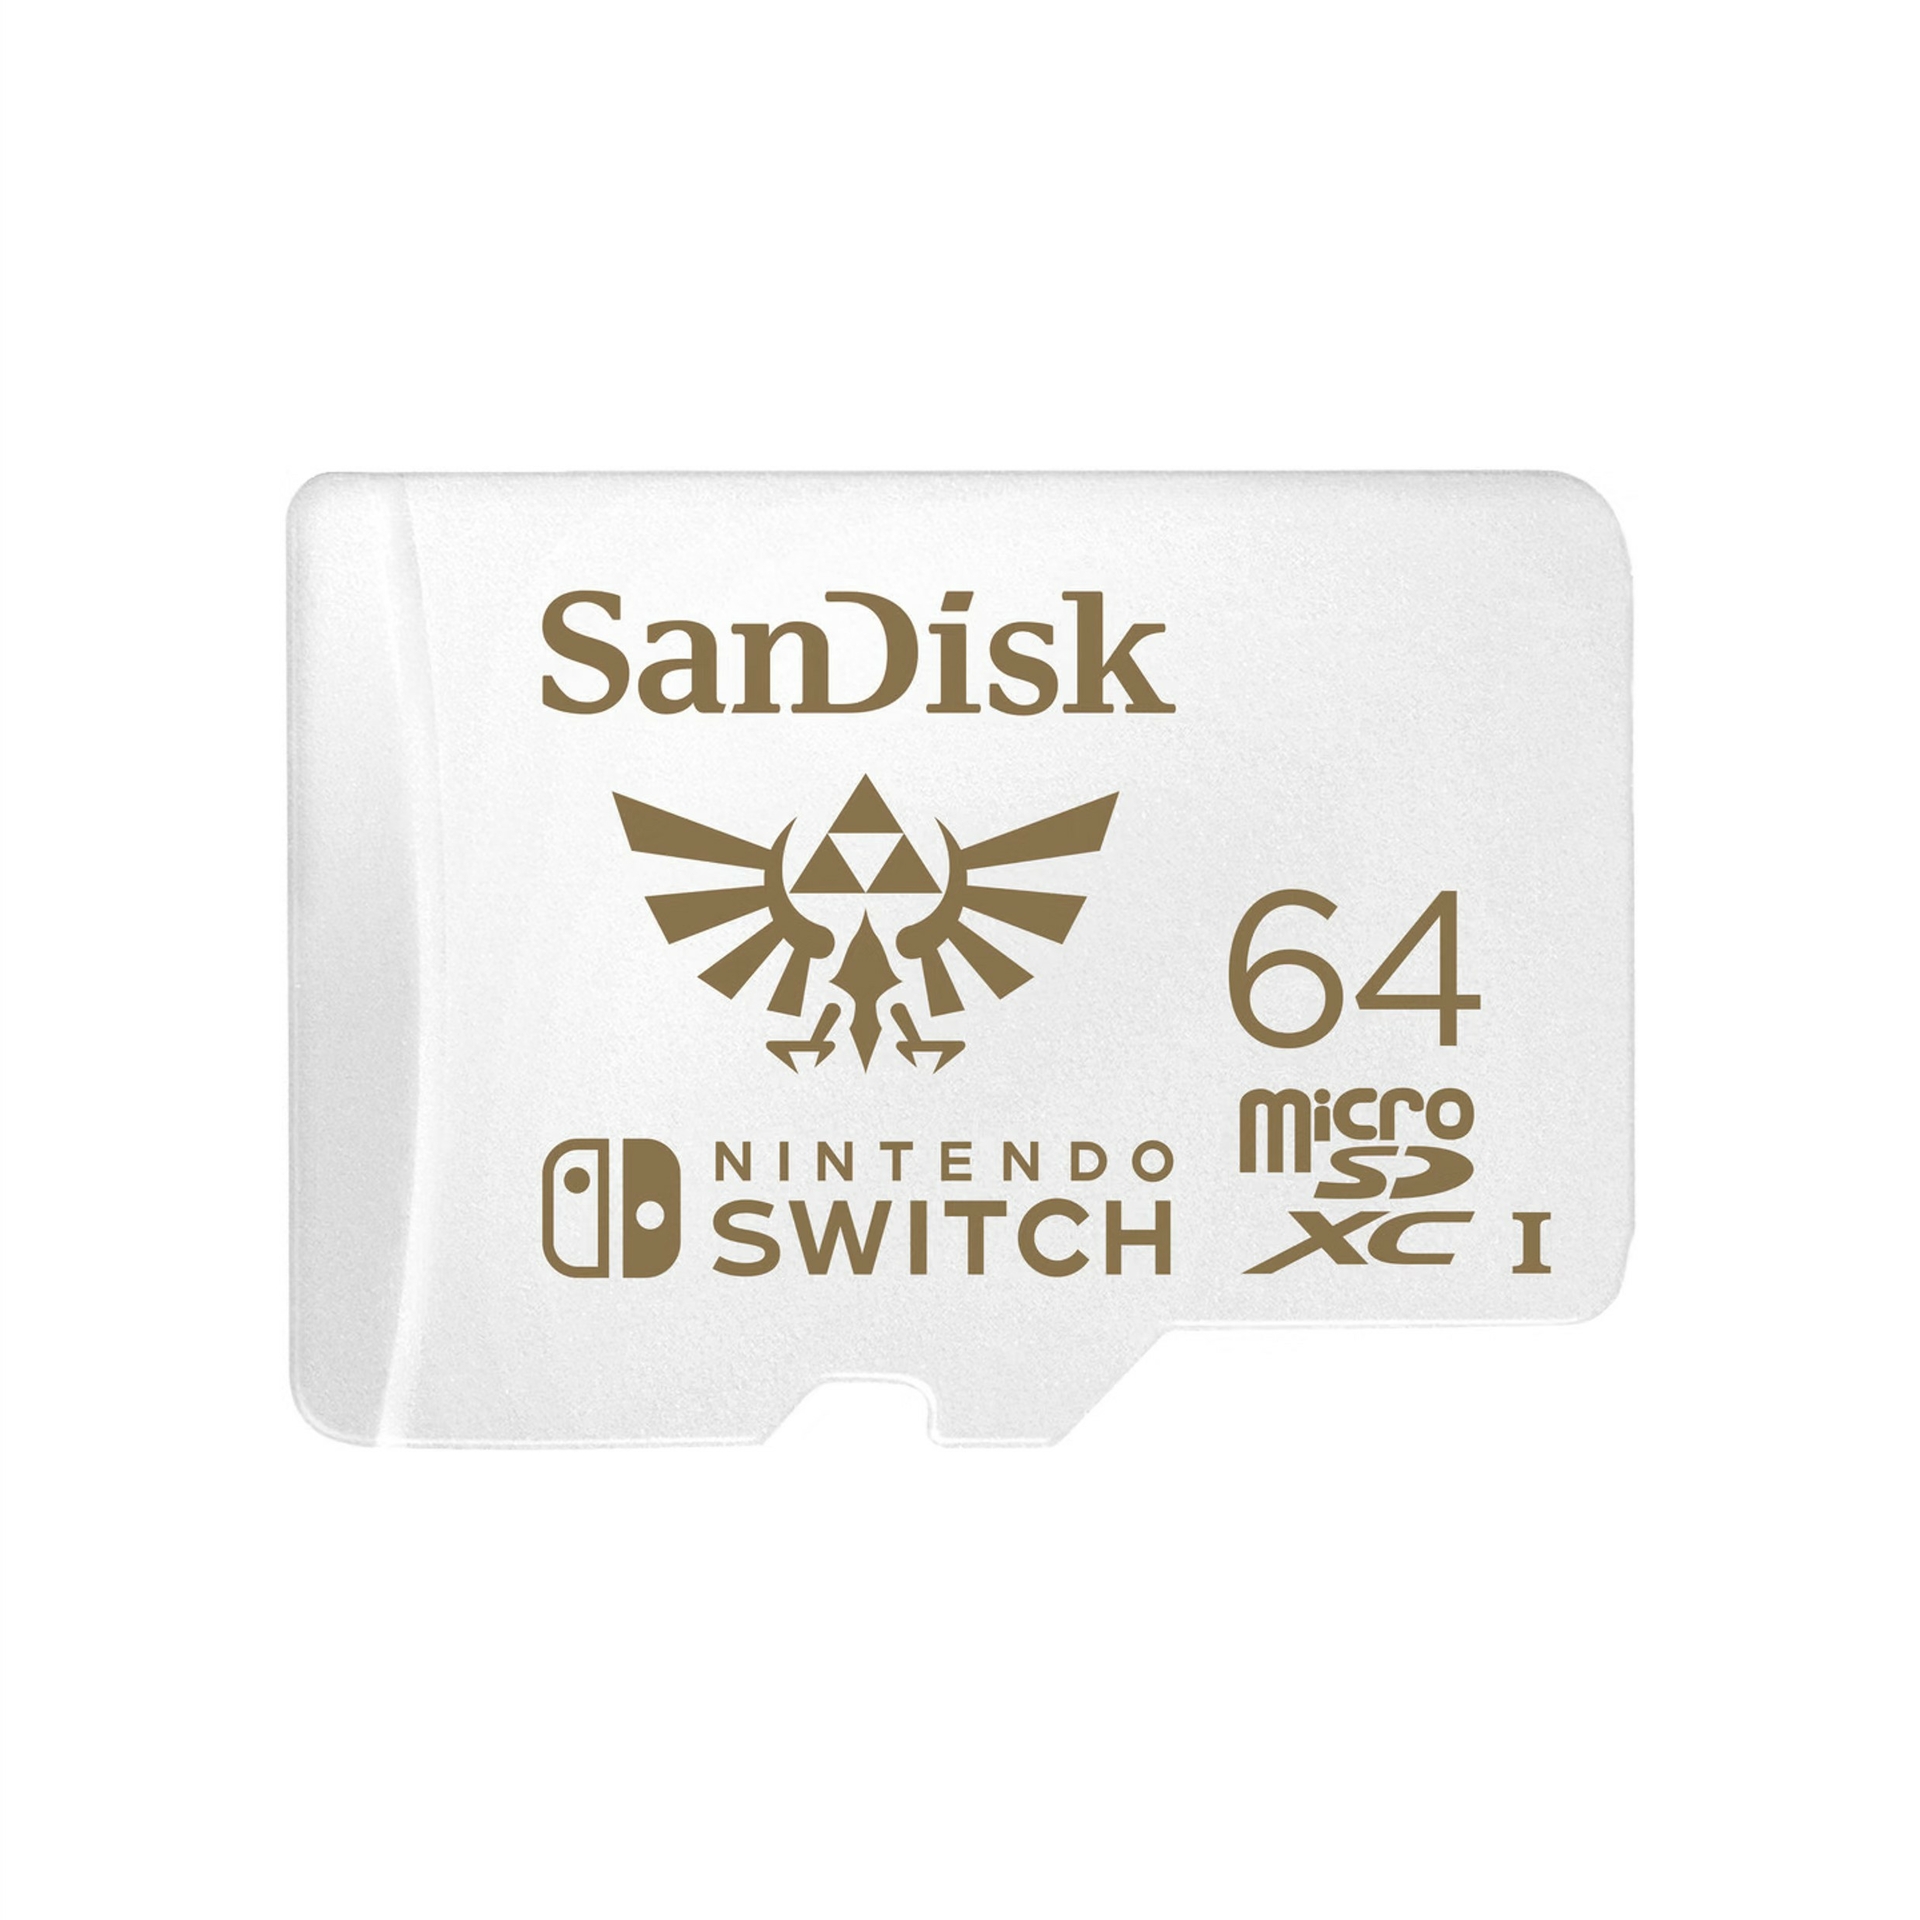 SanDisk MicroSDXC 64GB - Legend of Zelda - Nintendo Switch Hardware